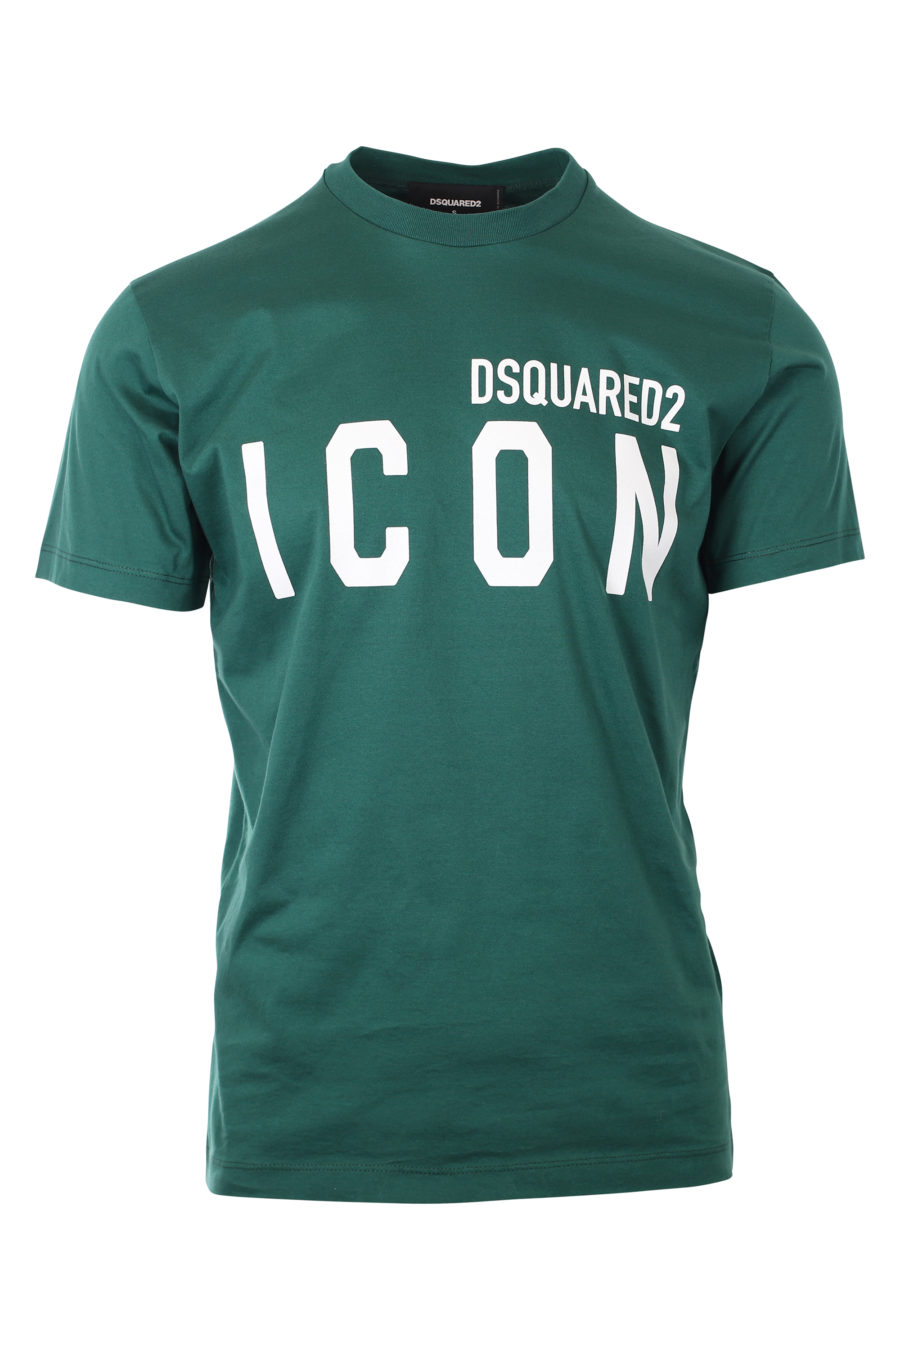 Camiseta verde con logo "icon" - IMG 9741